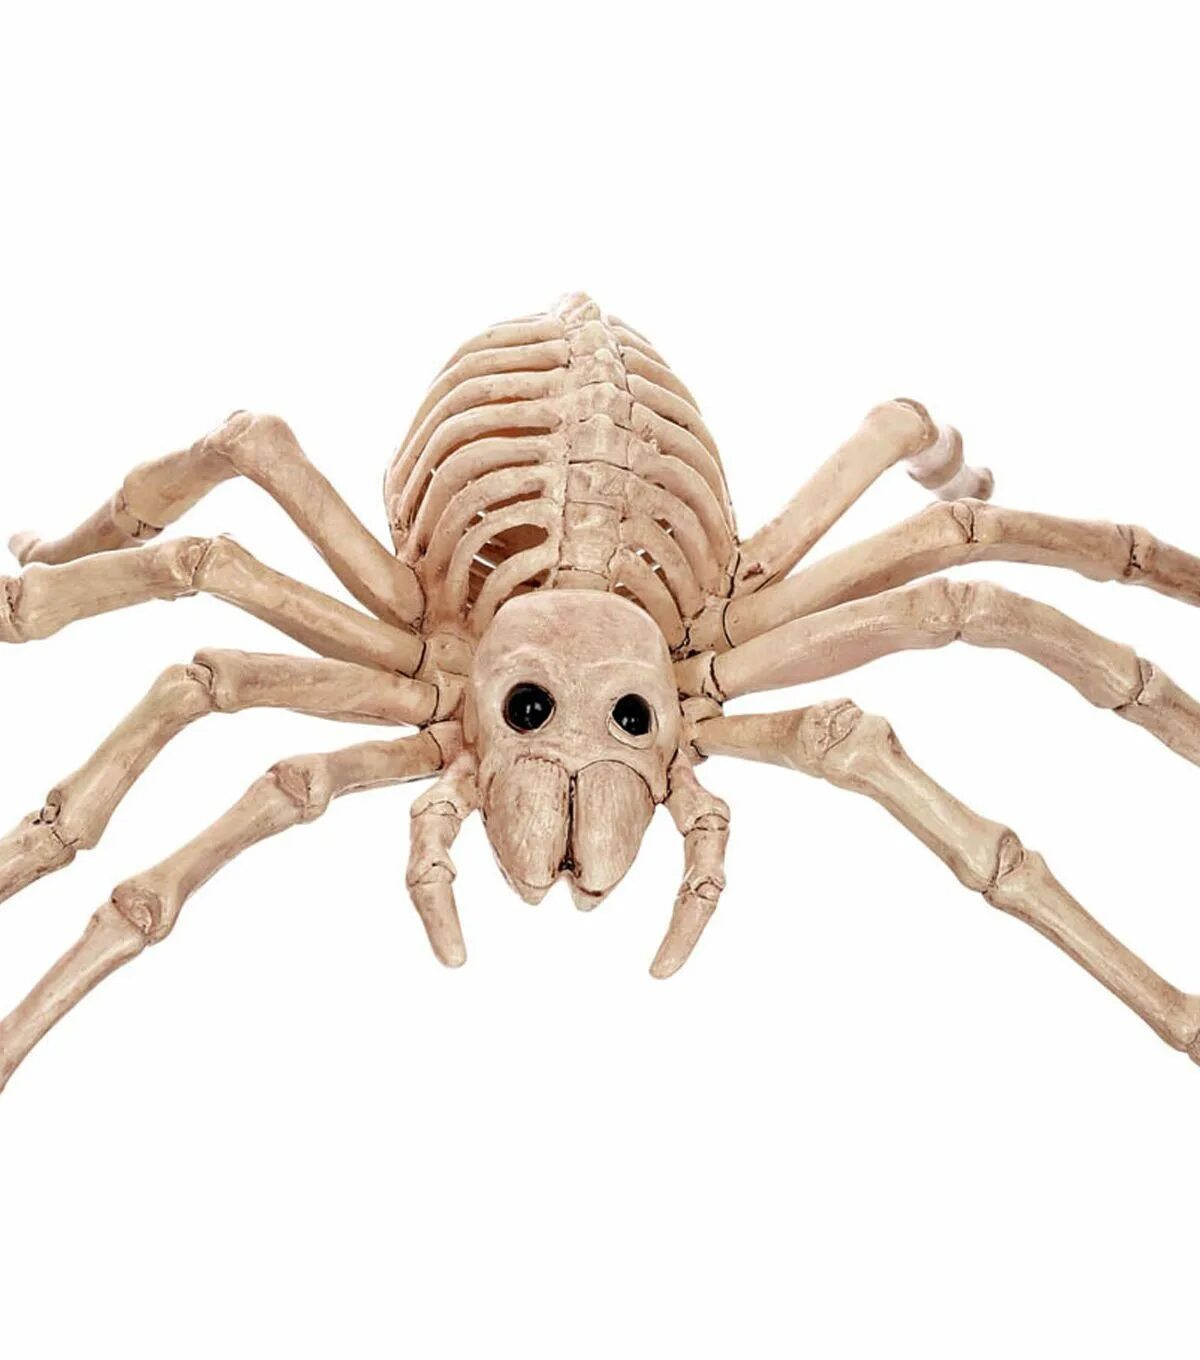 Скелет краба. Скелет паука. Строение скелета паука. Мускулатурный скелет краба.